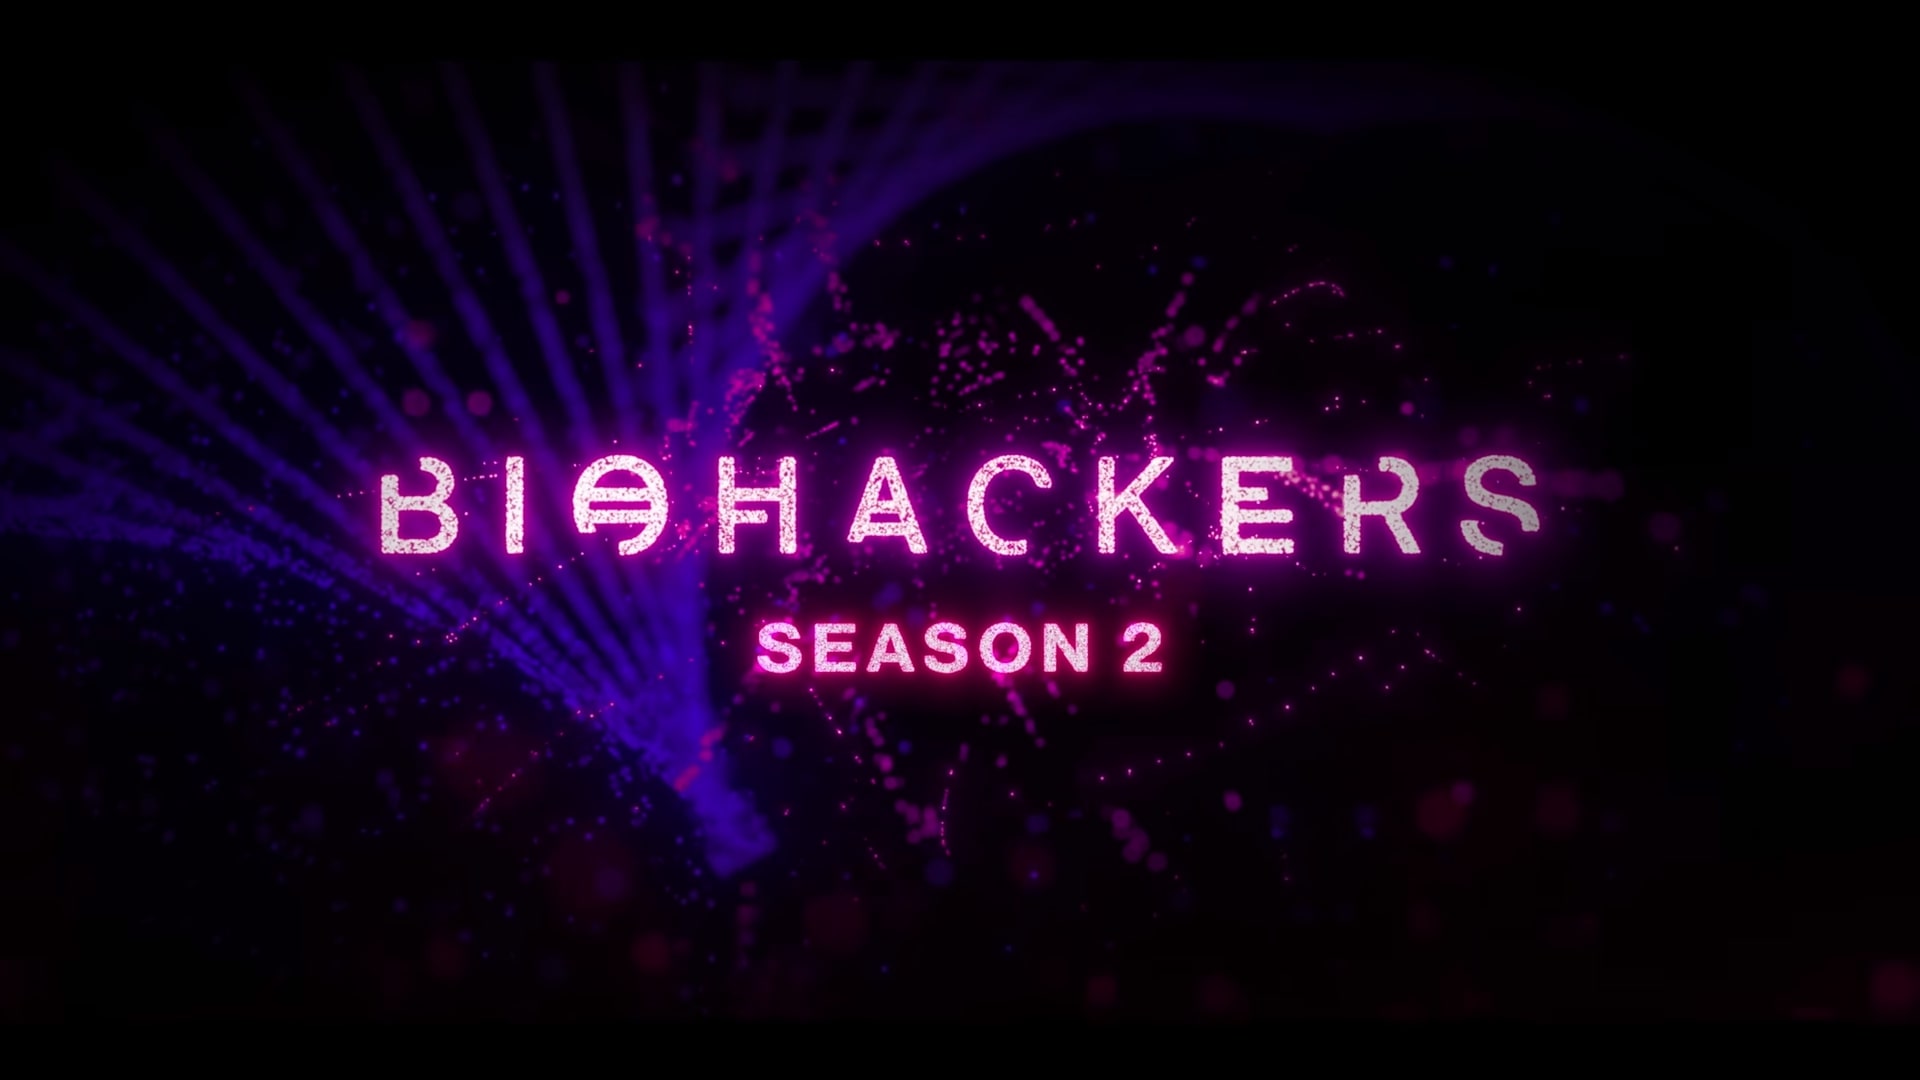 Netflix Biohackers Season 2 Trailer, Coming to Netflix in July 2021